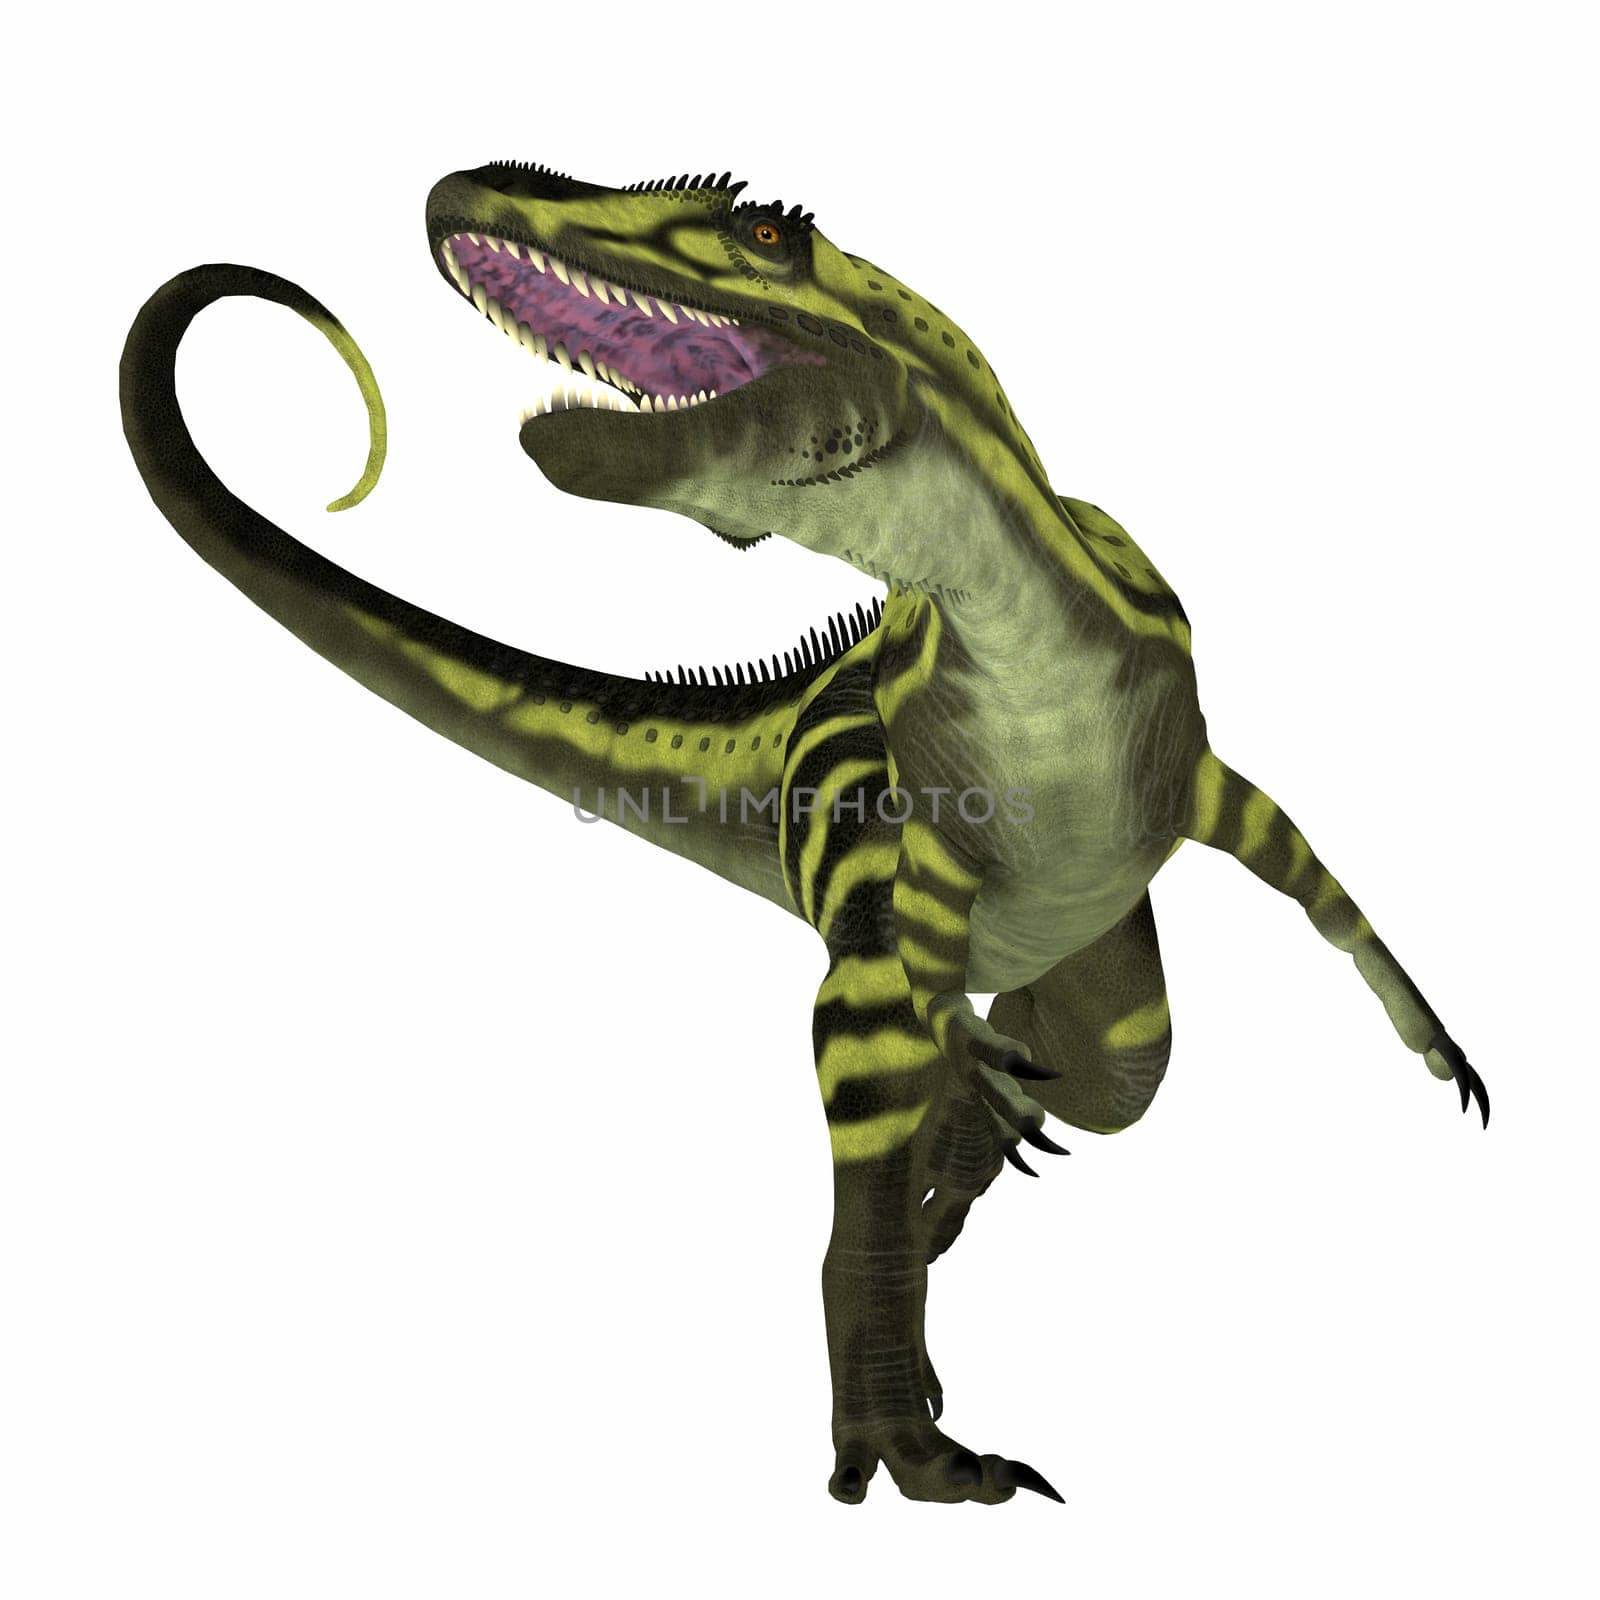 Torvosaurus Ferocious Dinosaur by Catmando